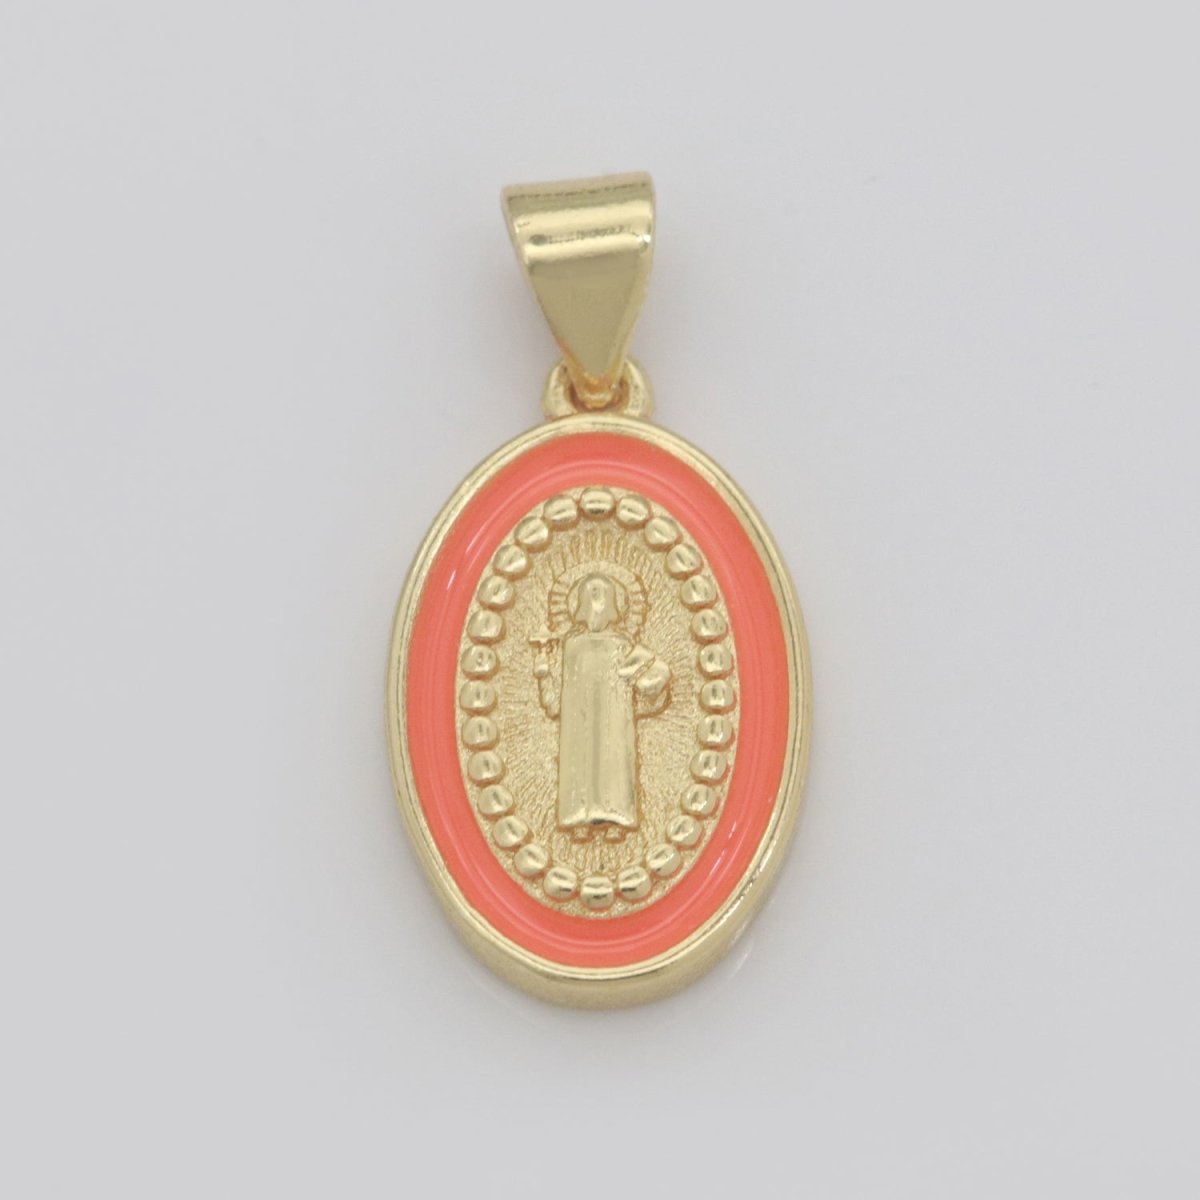 Dainty Saint Jude Charm gold medallion Charm, gold filled San Judas religious medal Patron Saint Pendant Religious Coin Catholic Enamel Jewelry N-1353 N-1354 N-1355 N-1356 N-1357 N-1358 N-1359 N-1360 N-1361 N-1362 - DLUXCA